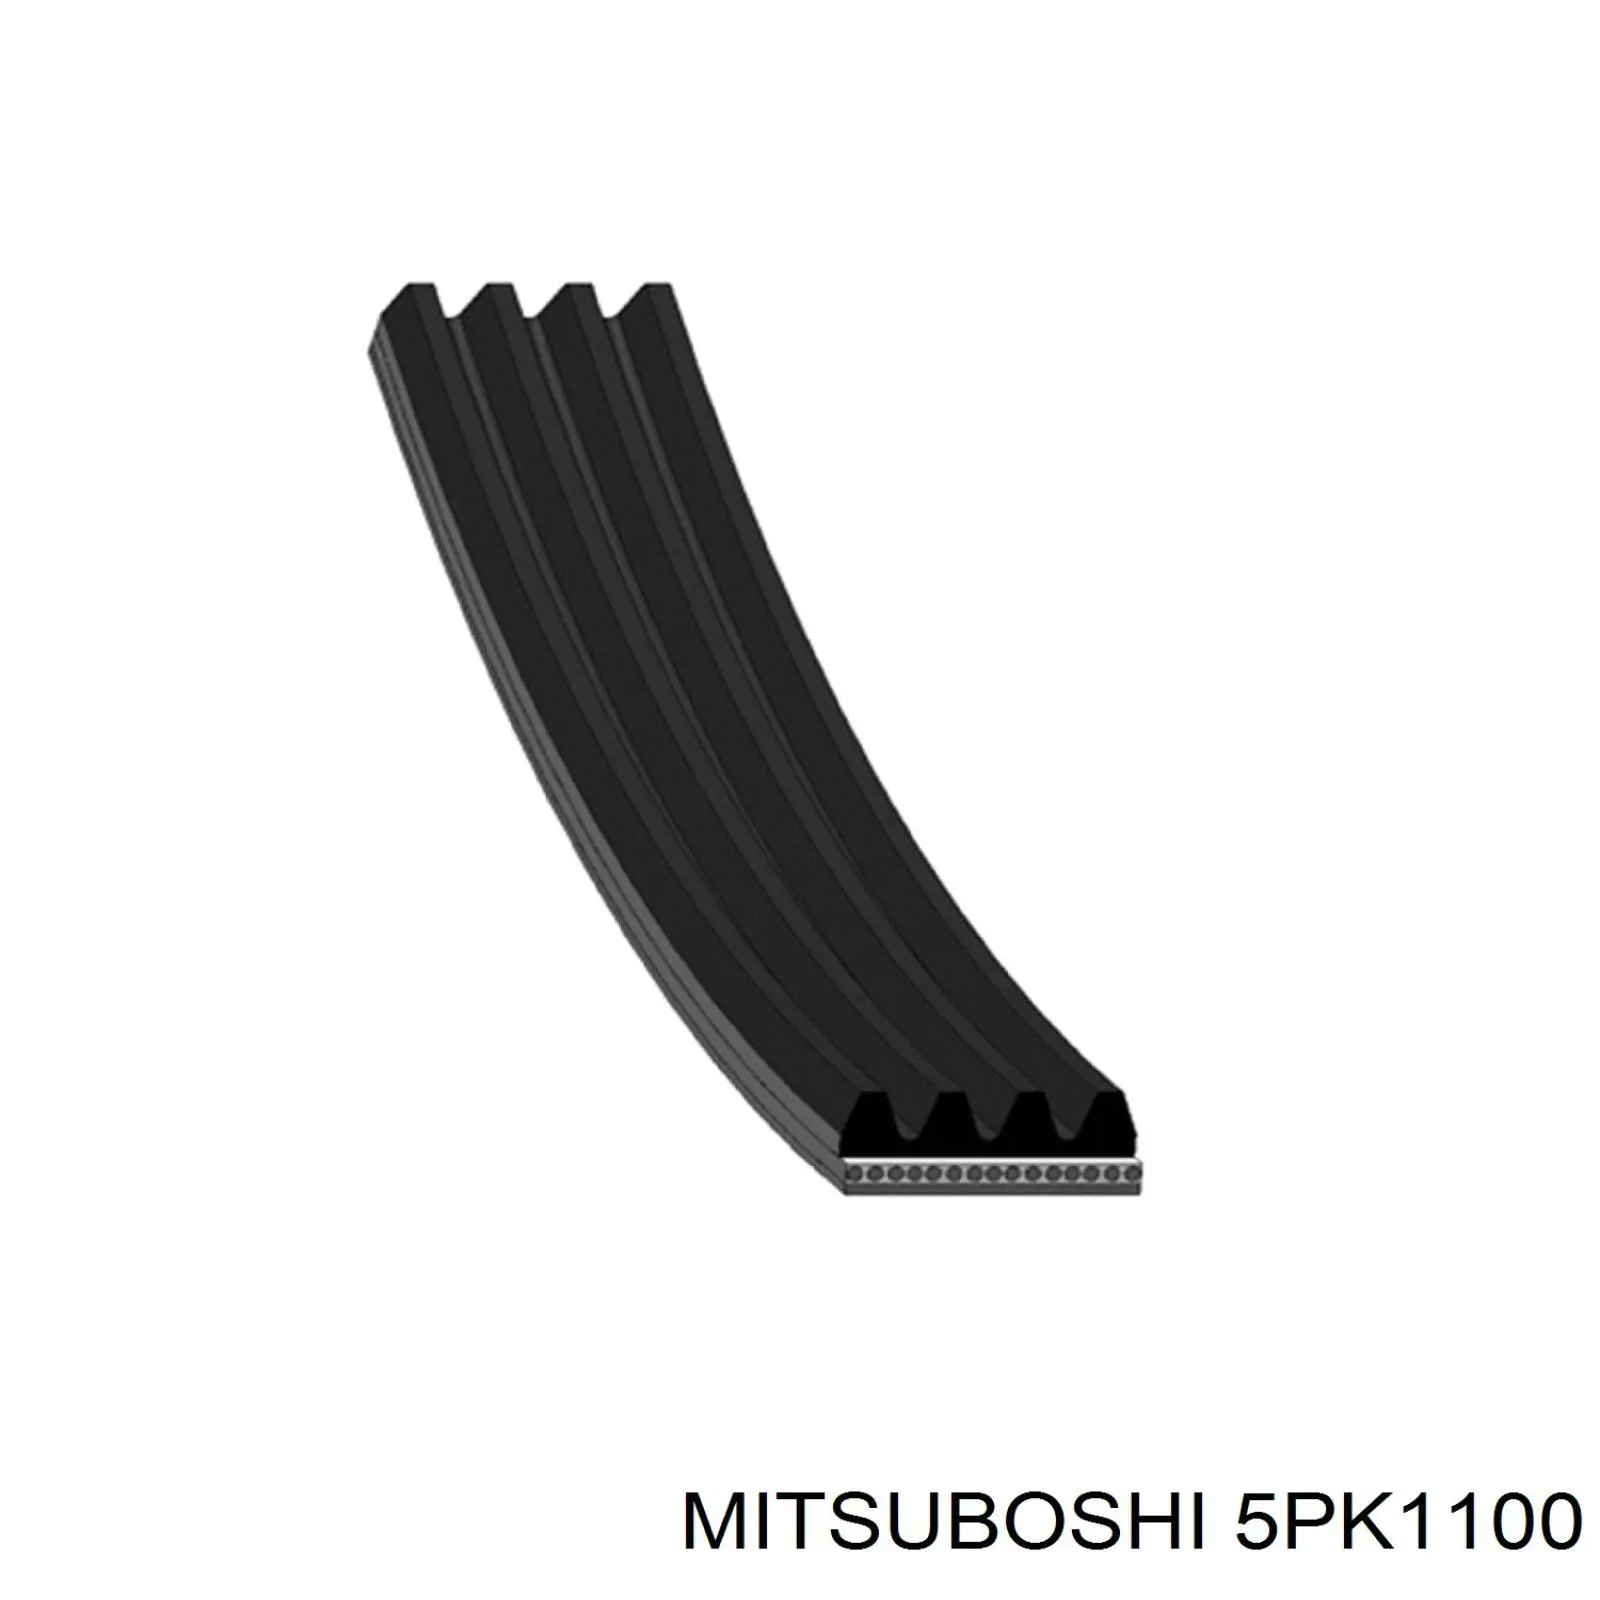 5PK1100 Mitsuboshi correa trapezoidal